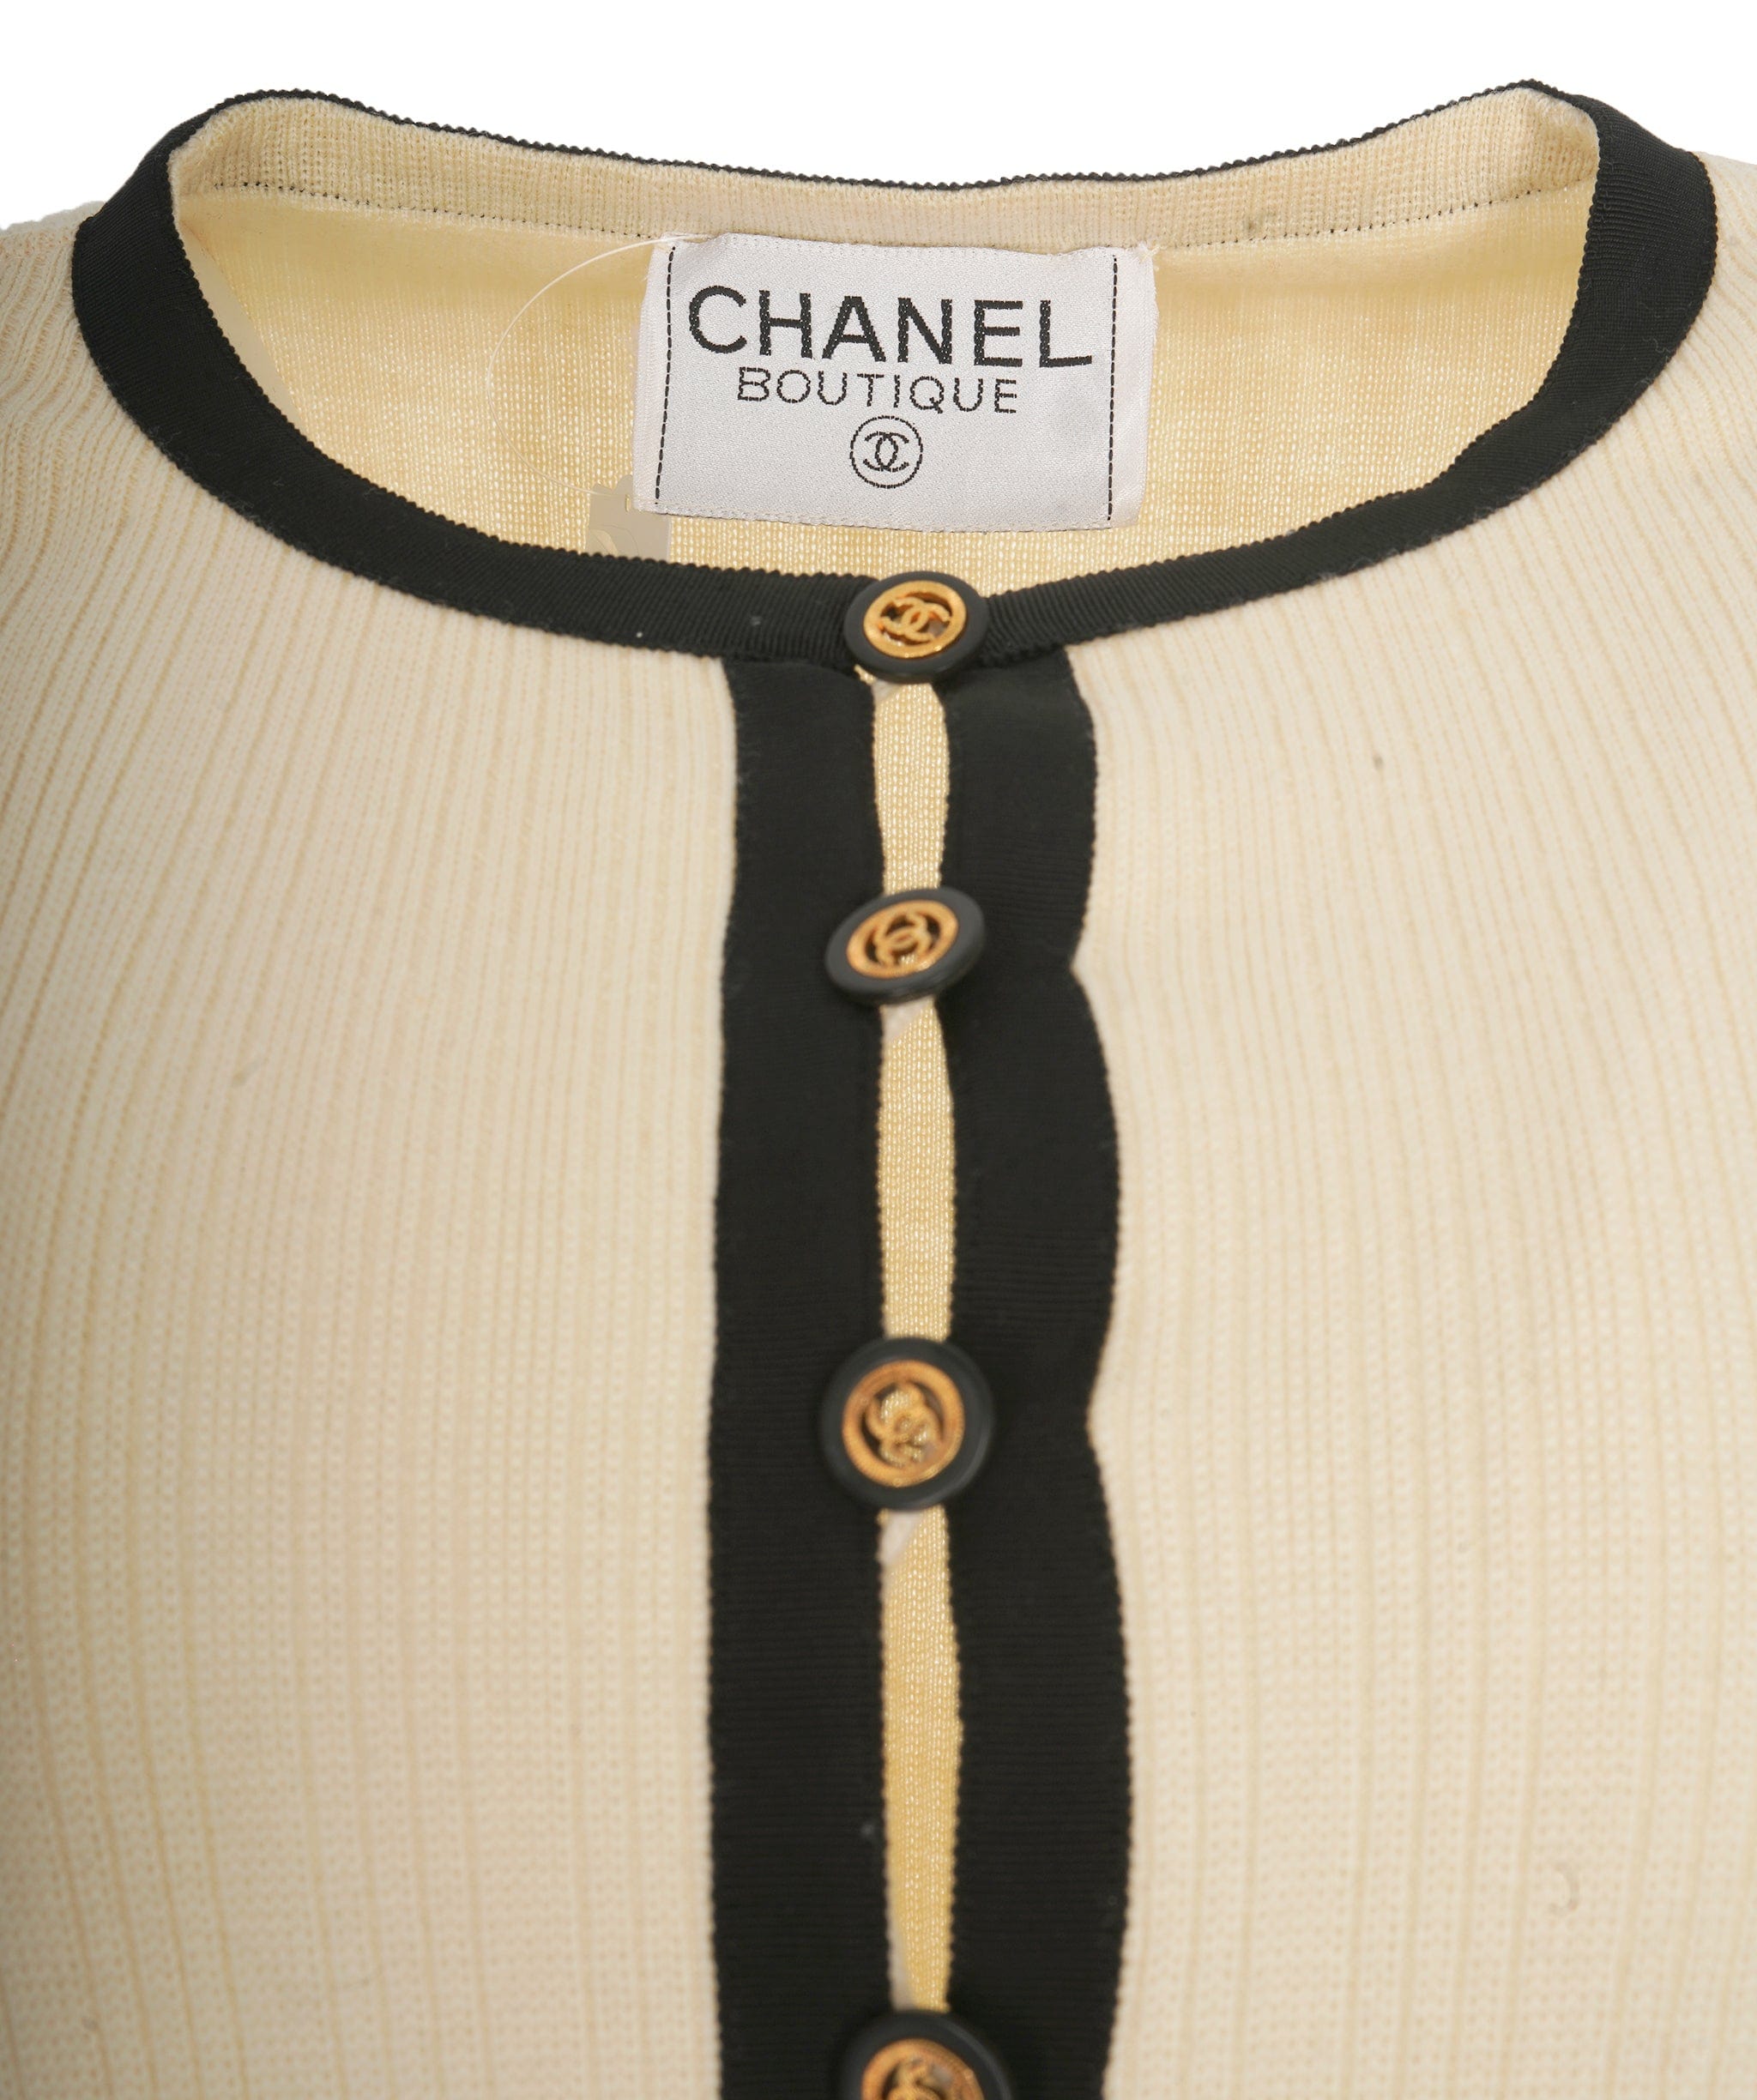 Chanel Chanel CC Buttons Knit Jacket & Pants Set Cream  ASL10612